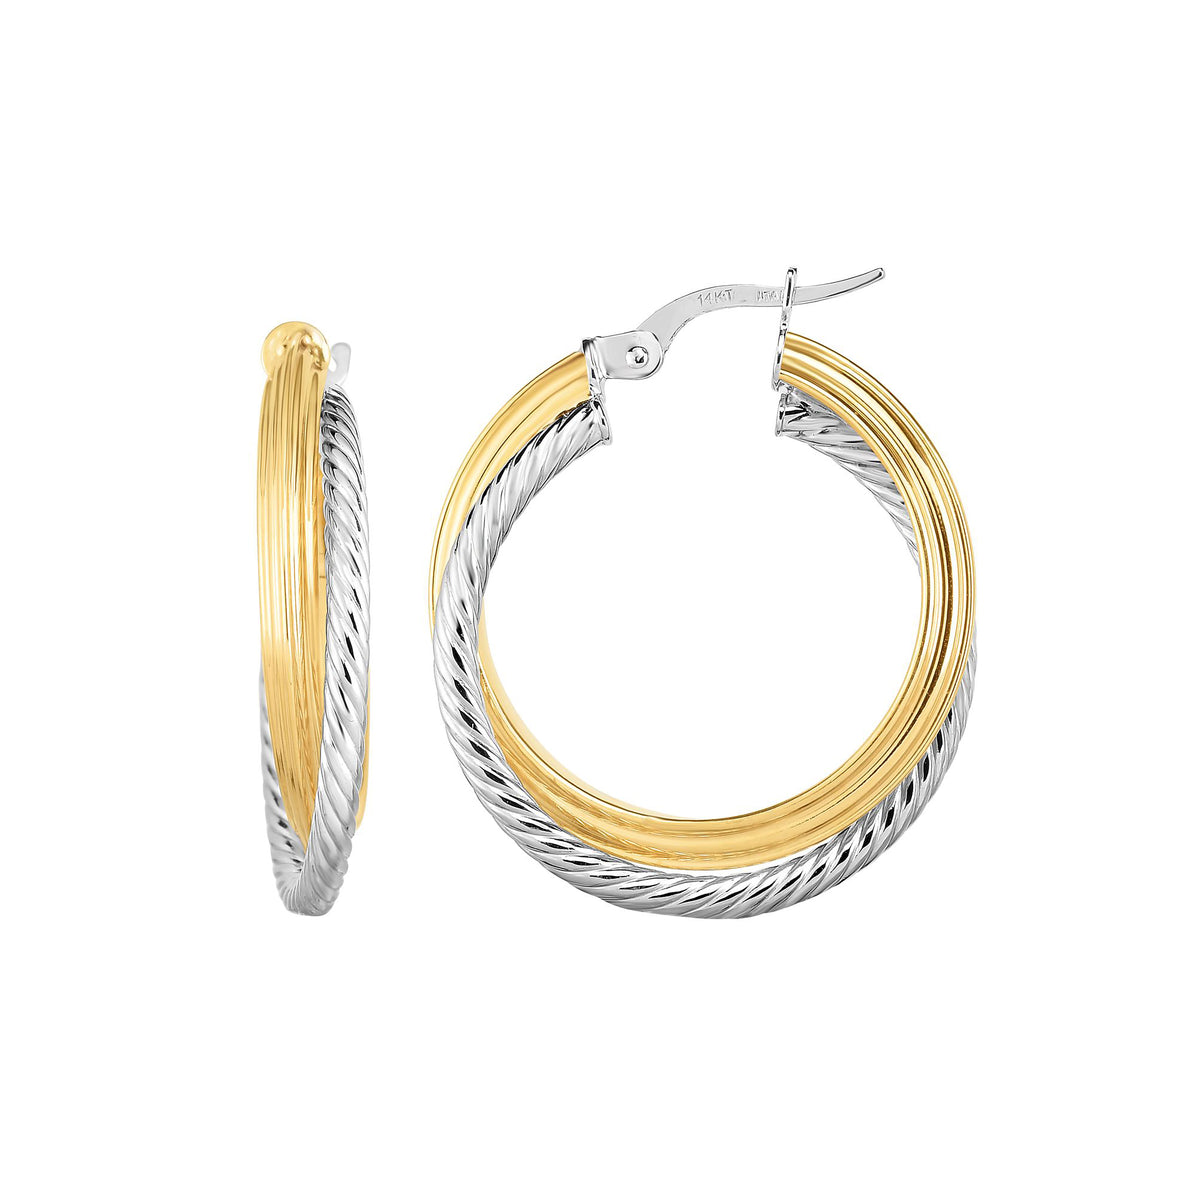 14K Gold Yellow And White Finish Hoop Fancy Earrings, Diameter 20mm